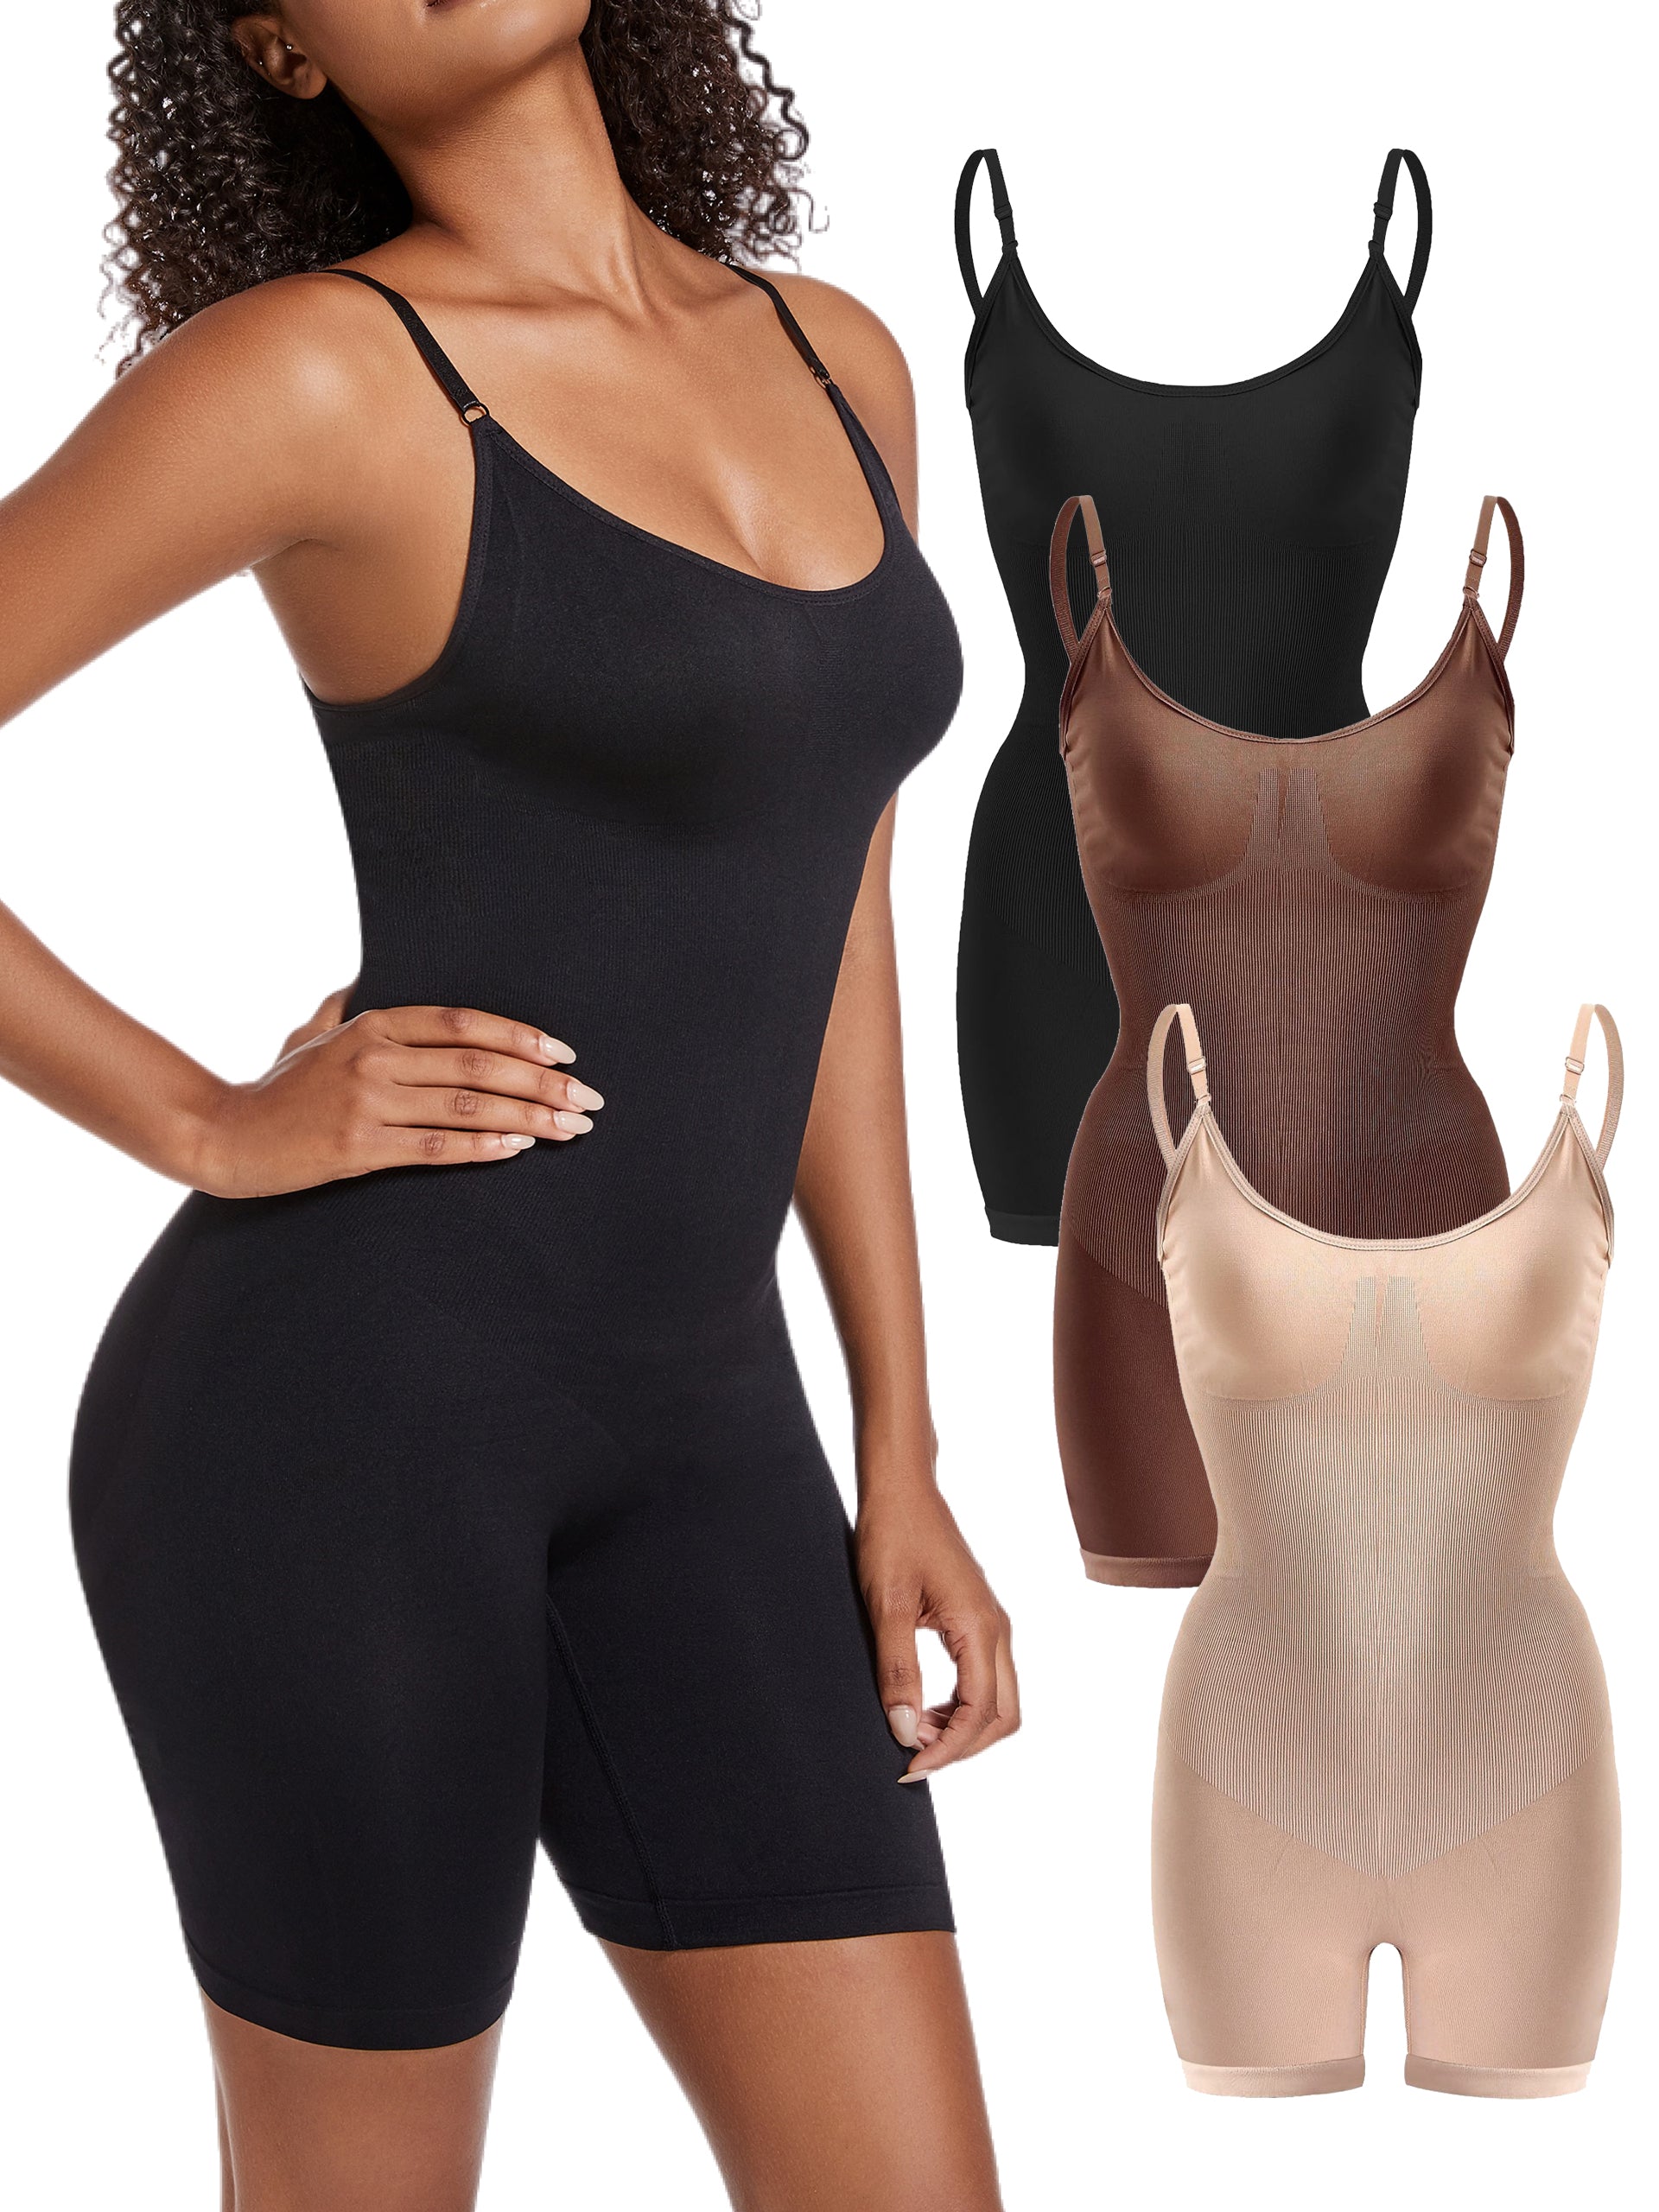 CHARMMA 3 Piece Tummy Control Bodysuits - Women's Backless Sexy Thong